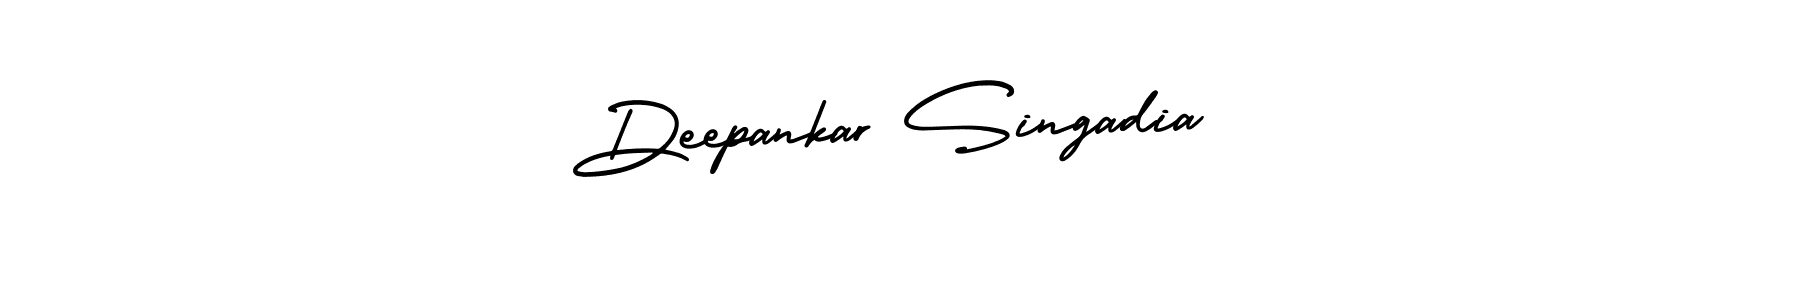 Use a signature maker to create a handwritten signature online. With this signature software, you can design (AmerikaSignatureDemo-Regular) your own signature for name Deepankar Singadia. Deepankar Singadia signature style 3 images and pictures png